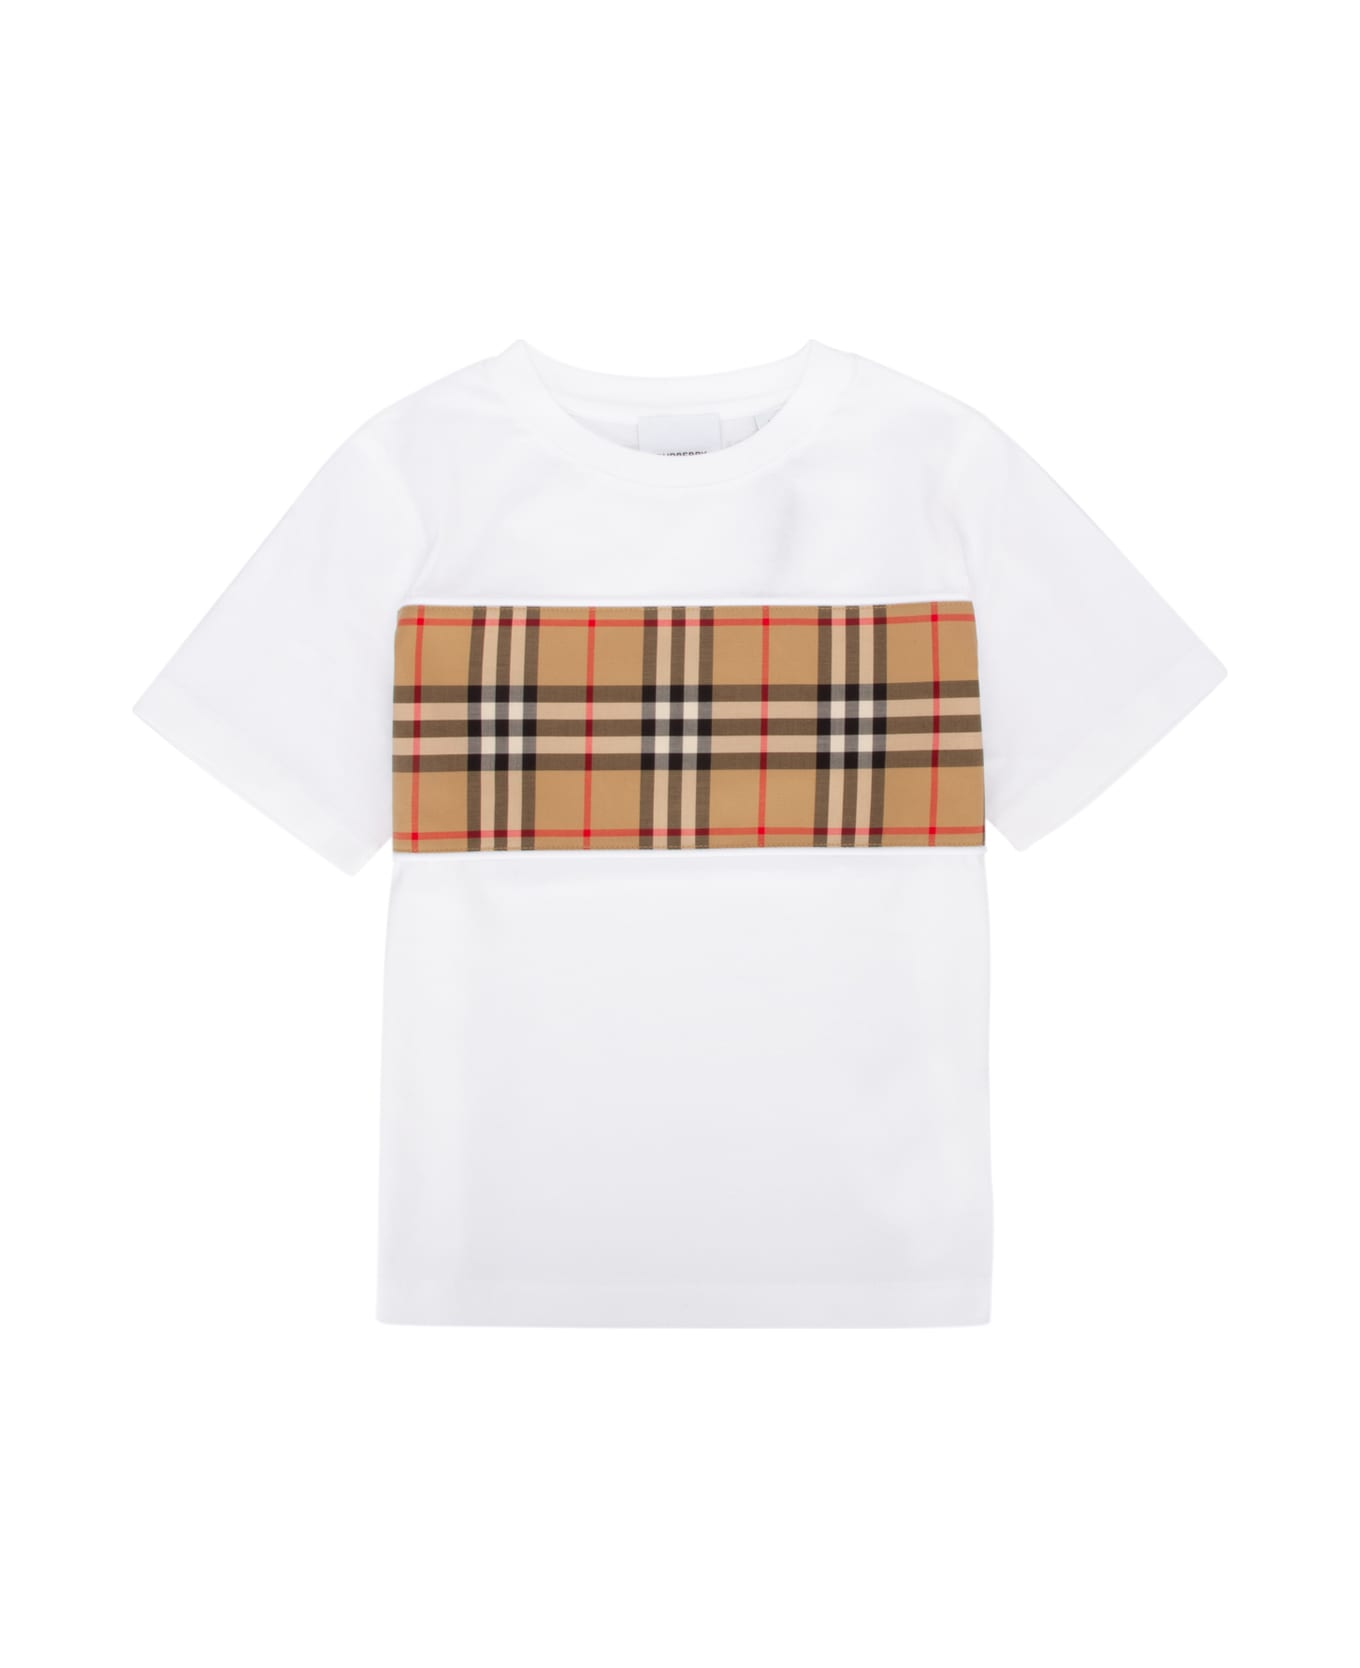 Burberry T-shirt - A1464 Tシャツ＆ポロシャツ